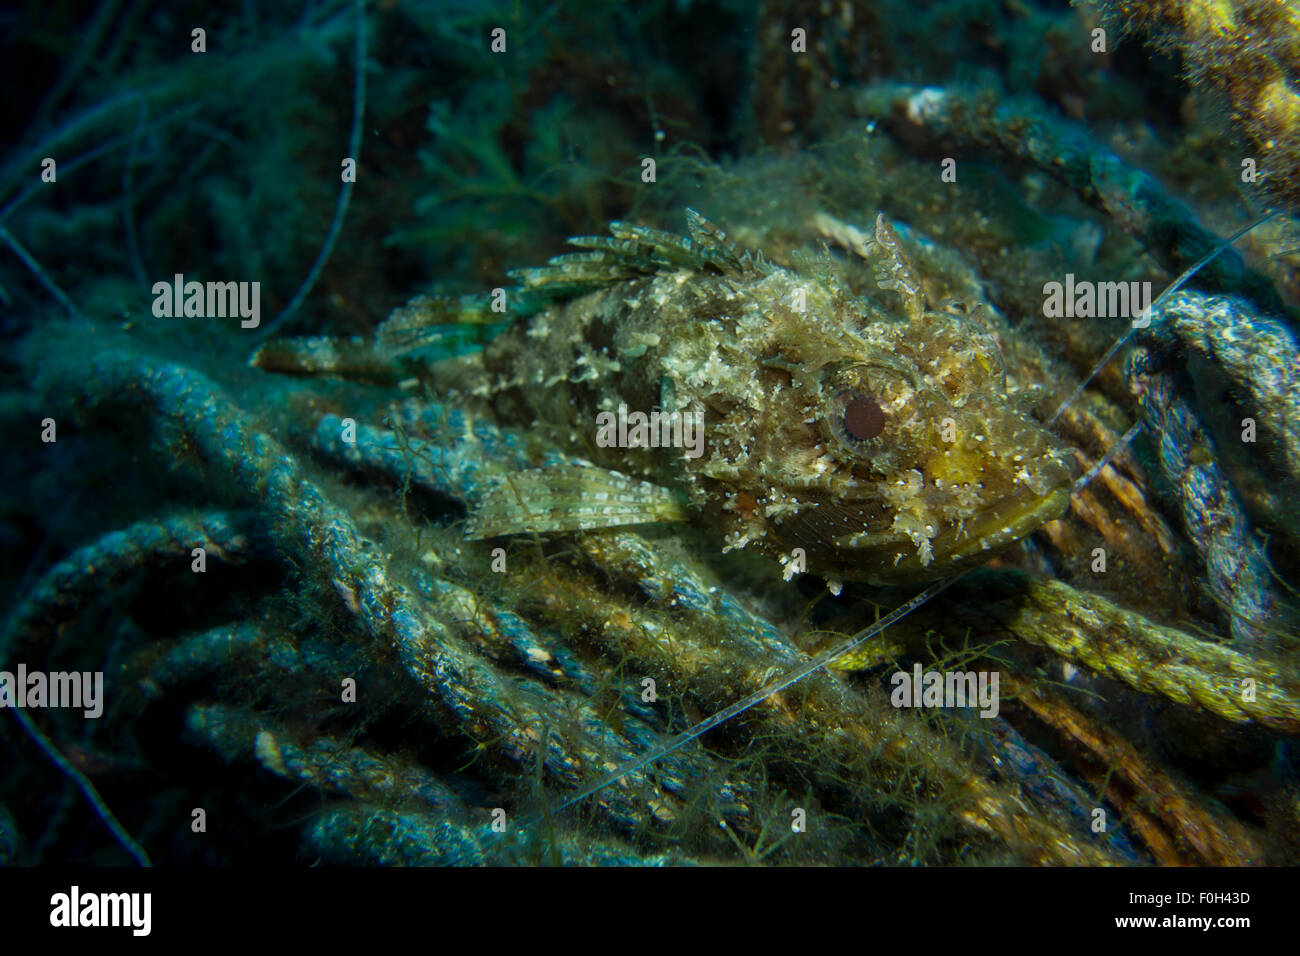 Dwarf Rockfish, Scorpaena notate, on algae covered fishing line in the Mediterranean Sea, Malta. Stock Photo